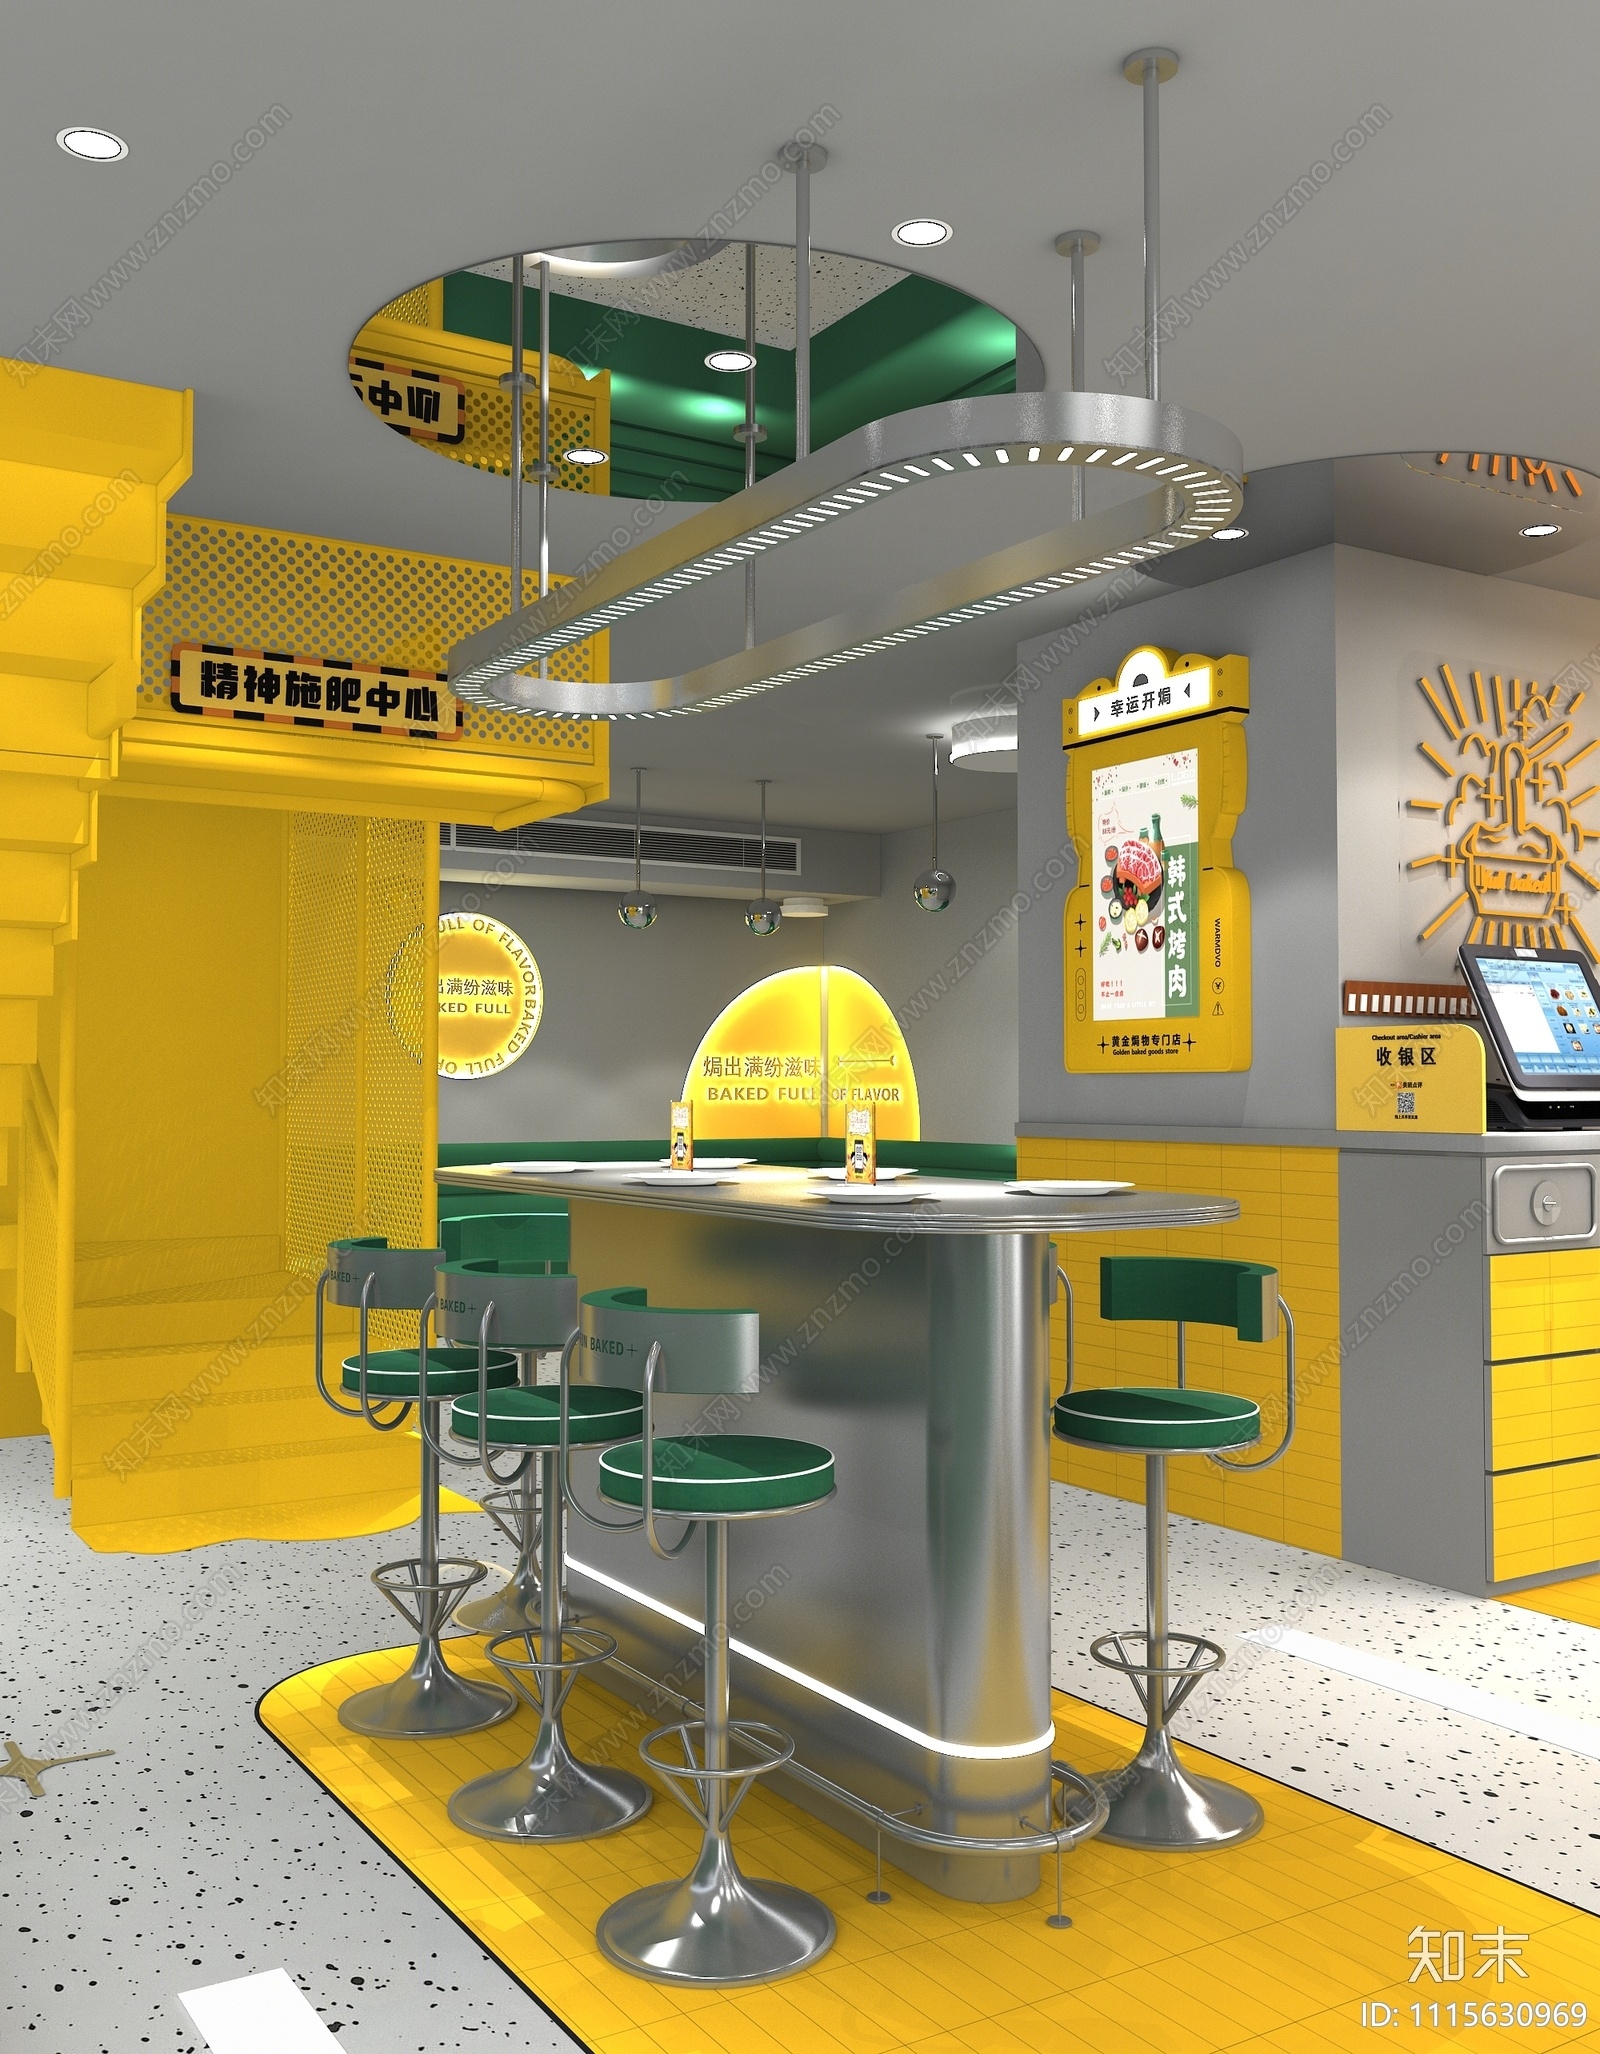 【3D悬赏模型】再叁设计工业风快餐厅吧台3D模型下载【ID:1115630969】